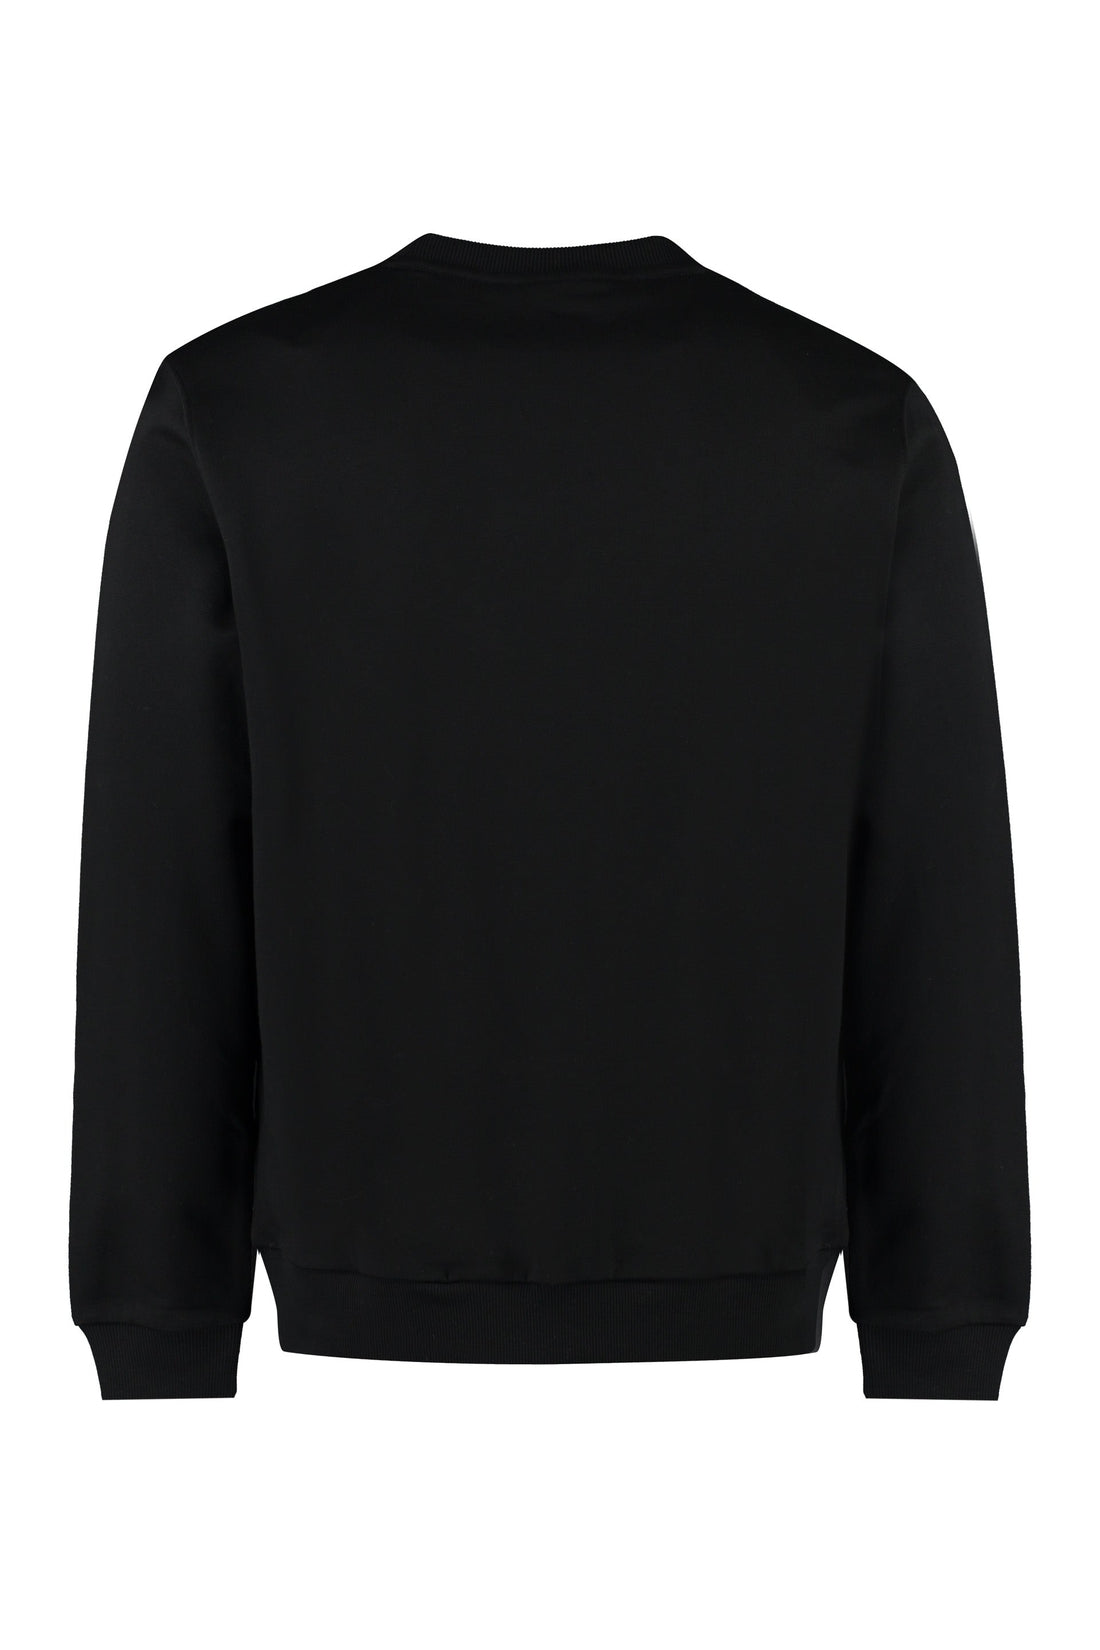 BOSS-OUTLET-SALE-Printed crew-neck sweatshirt-ARCHIVIST